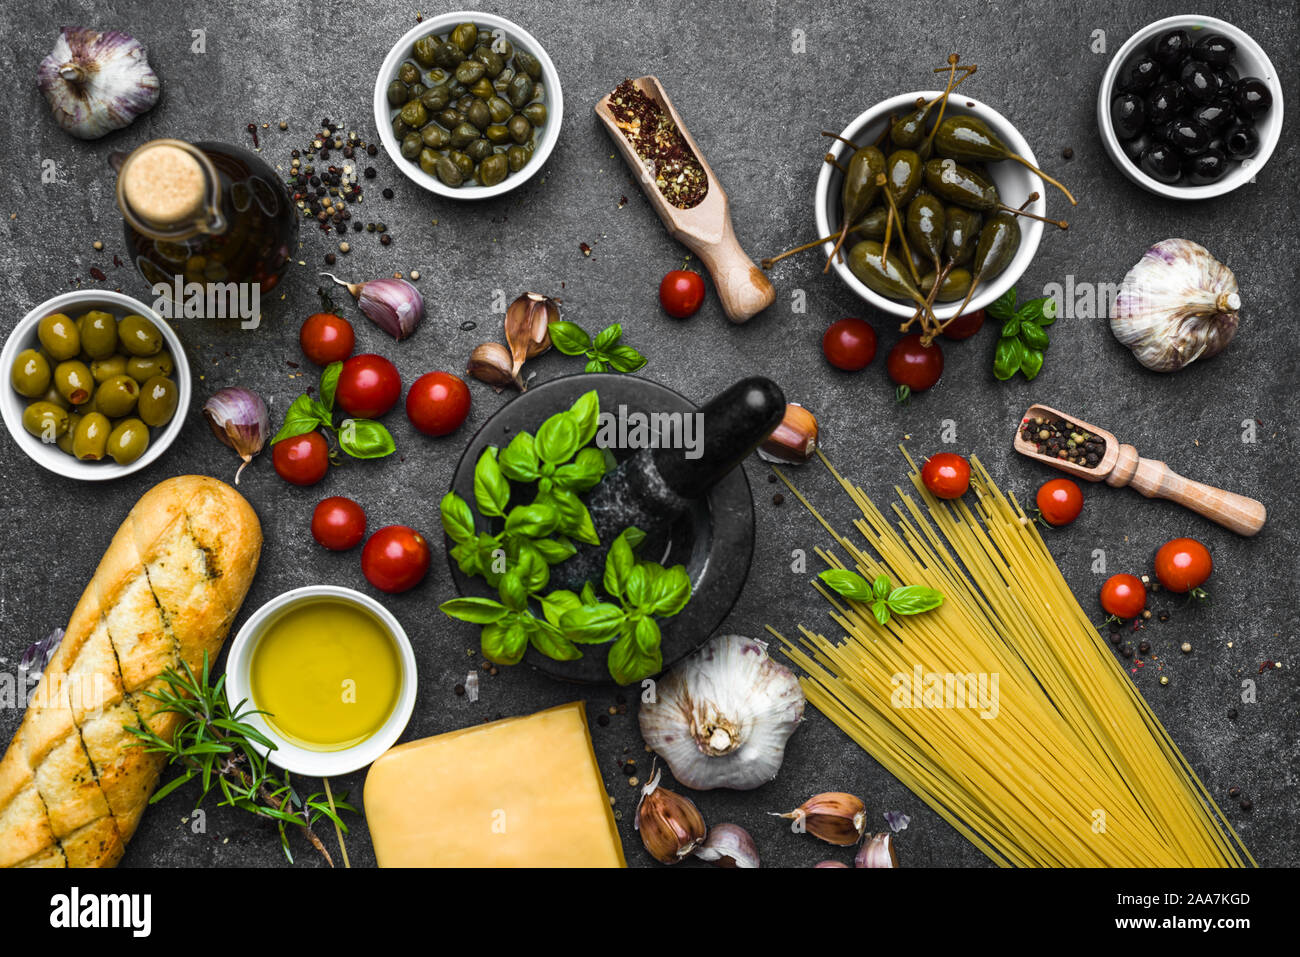 Italian food ingredients or mediterranean diet concept Stock Photo